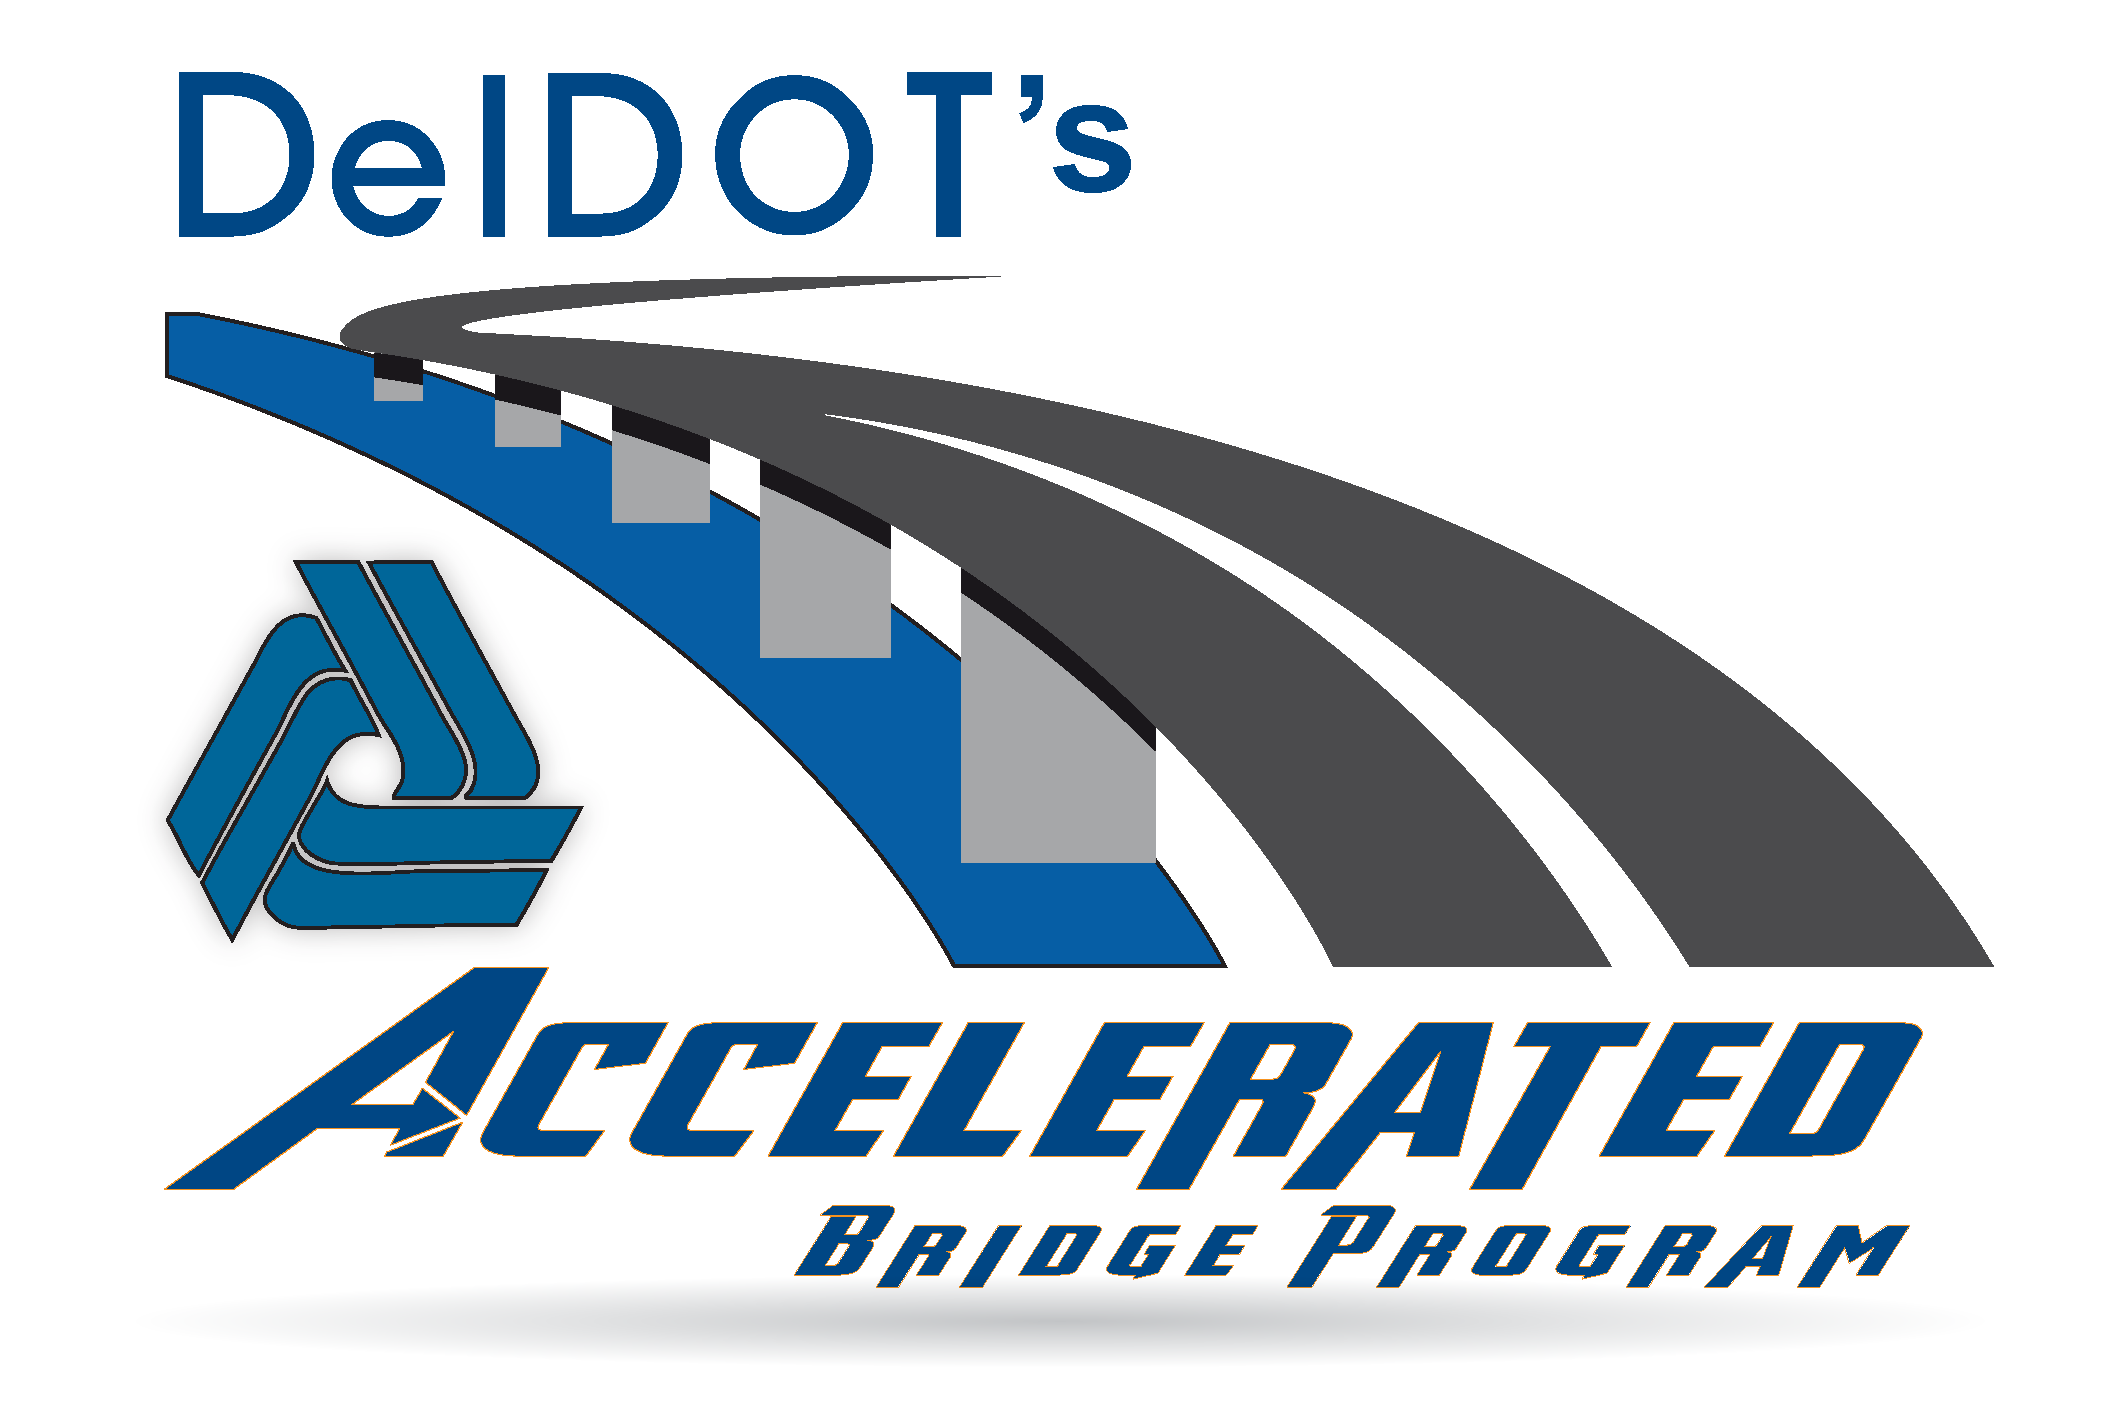 Delaware Department of Transportation Accelerated Bridge Program logo